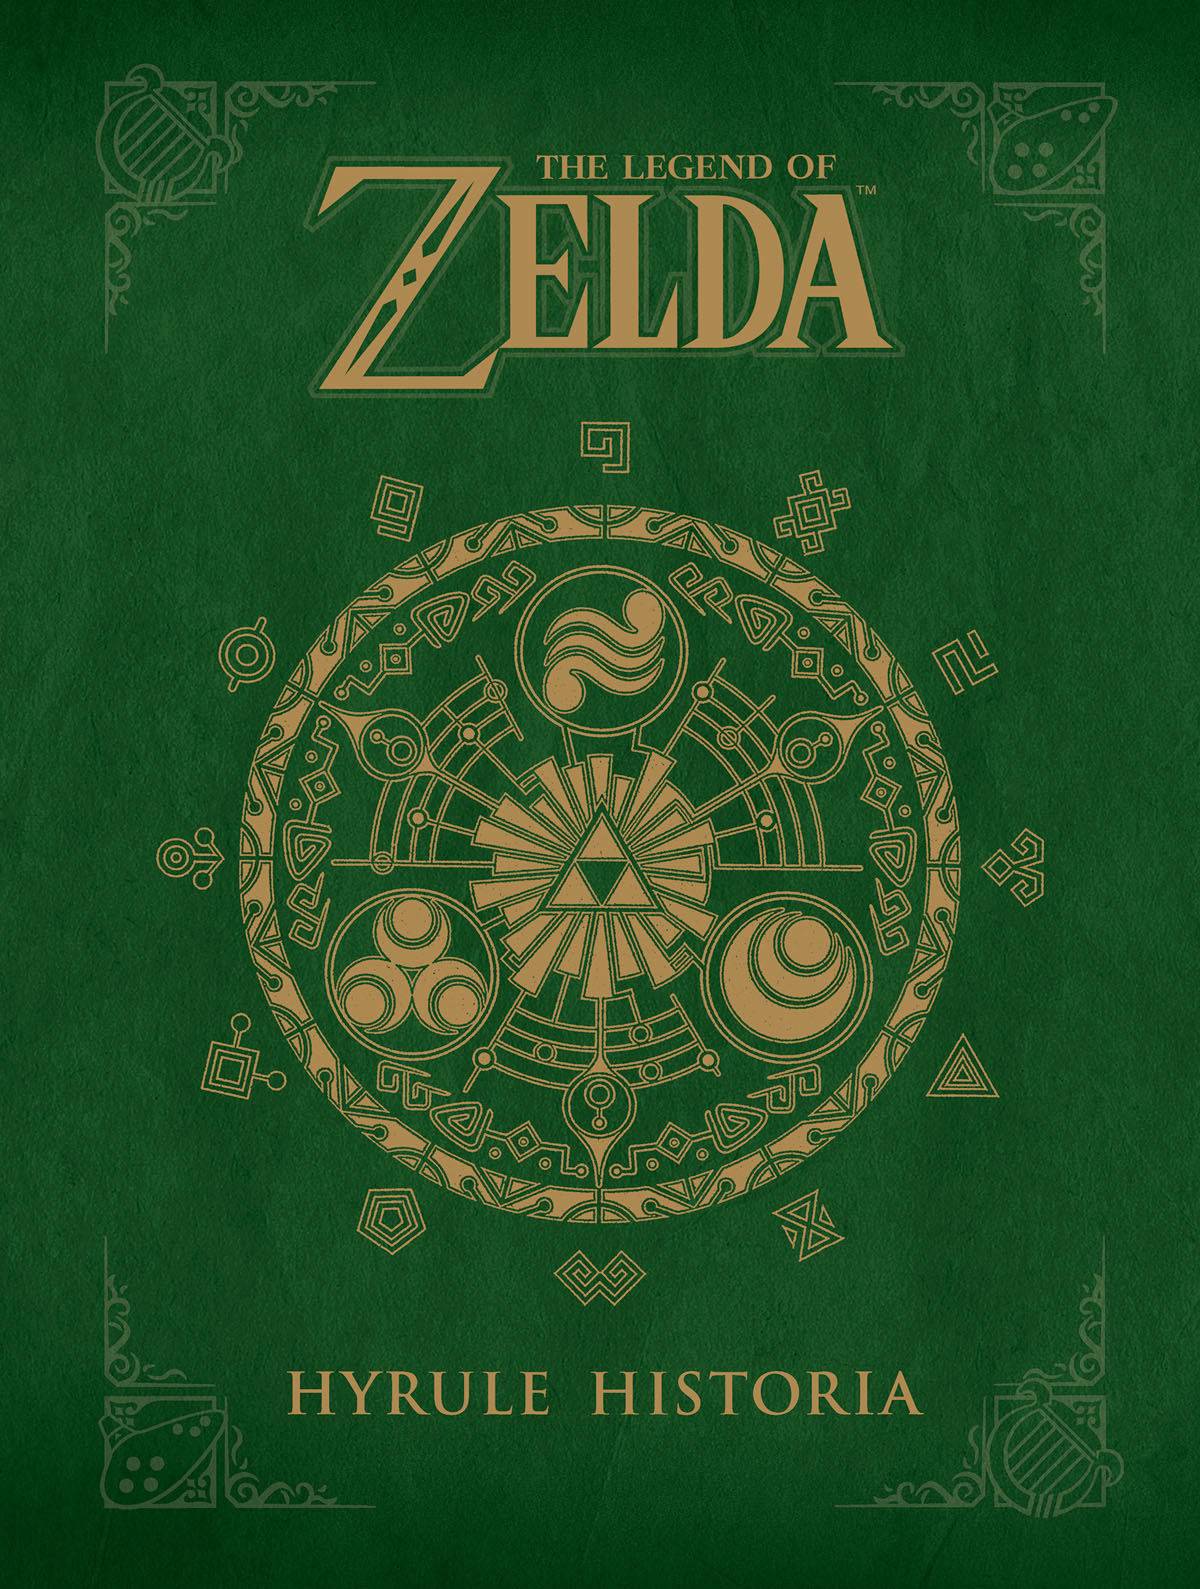 Legend of Zelda Hyrule Historia Hardcover New Printing